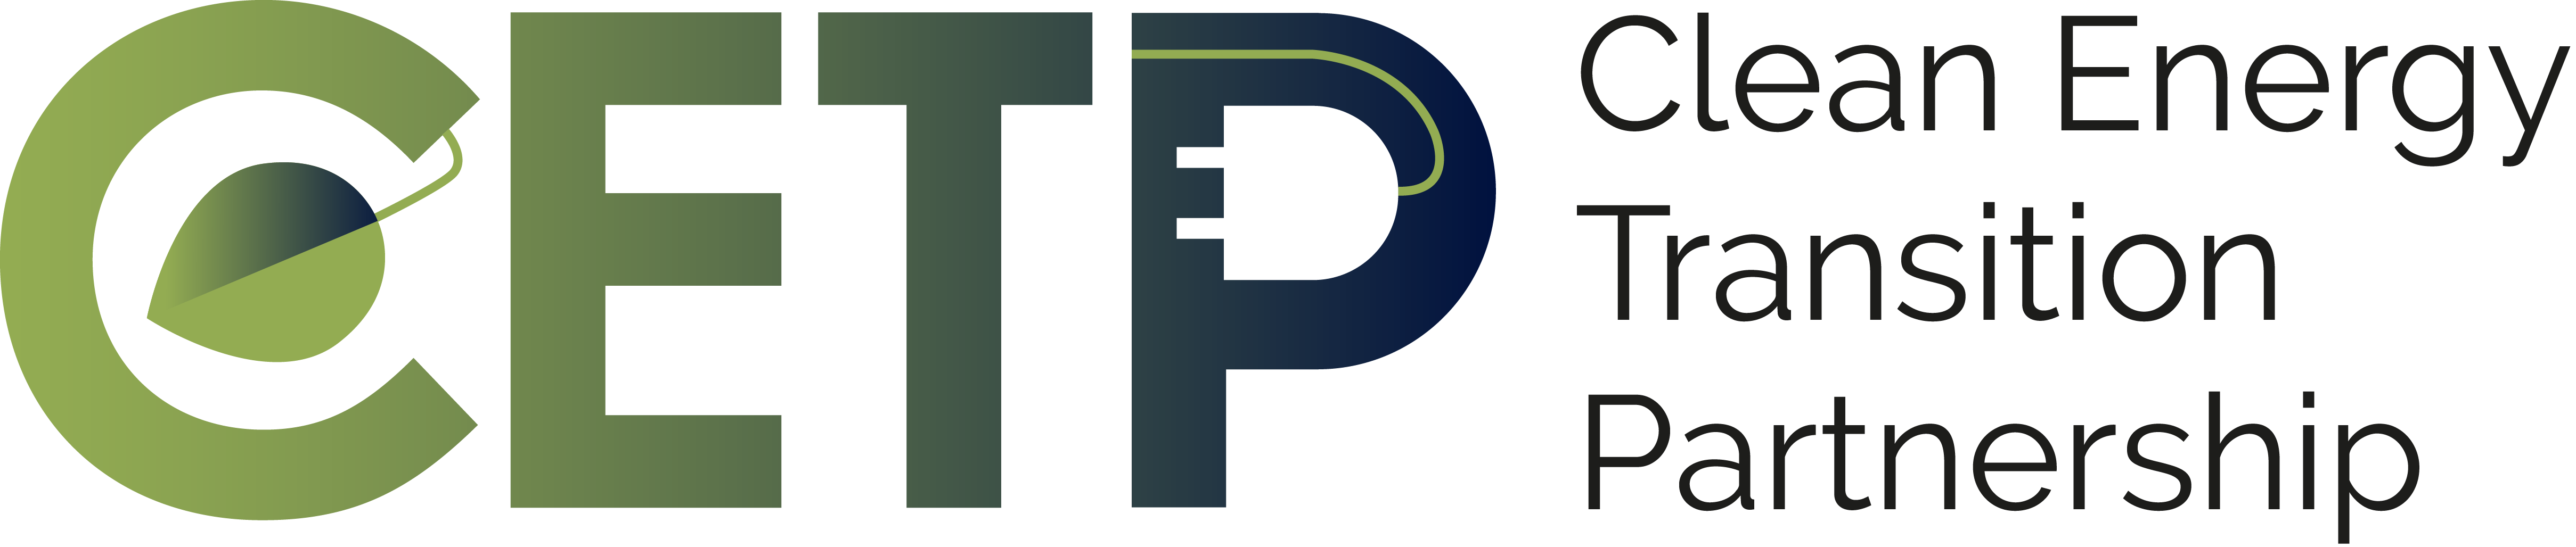 Clean Energy Transition Partnership (CEPT) logo